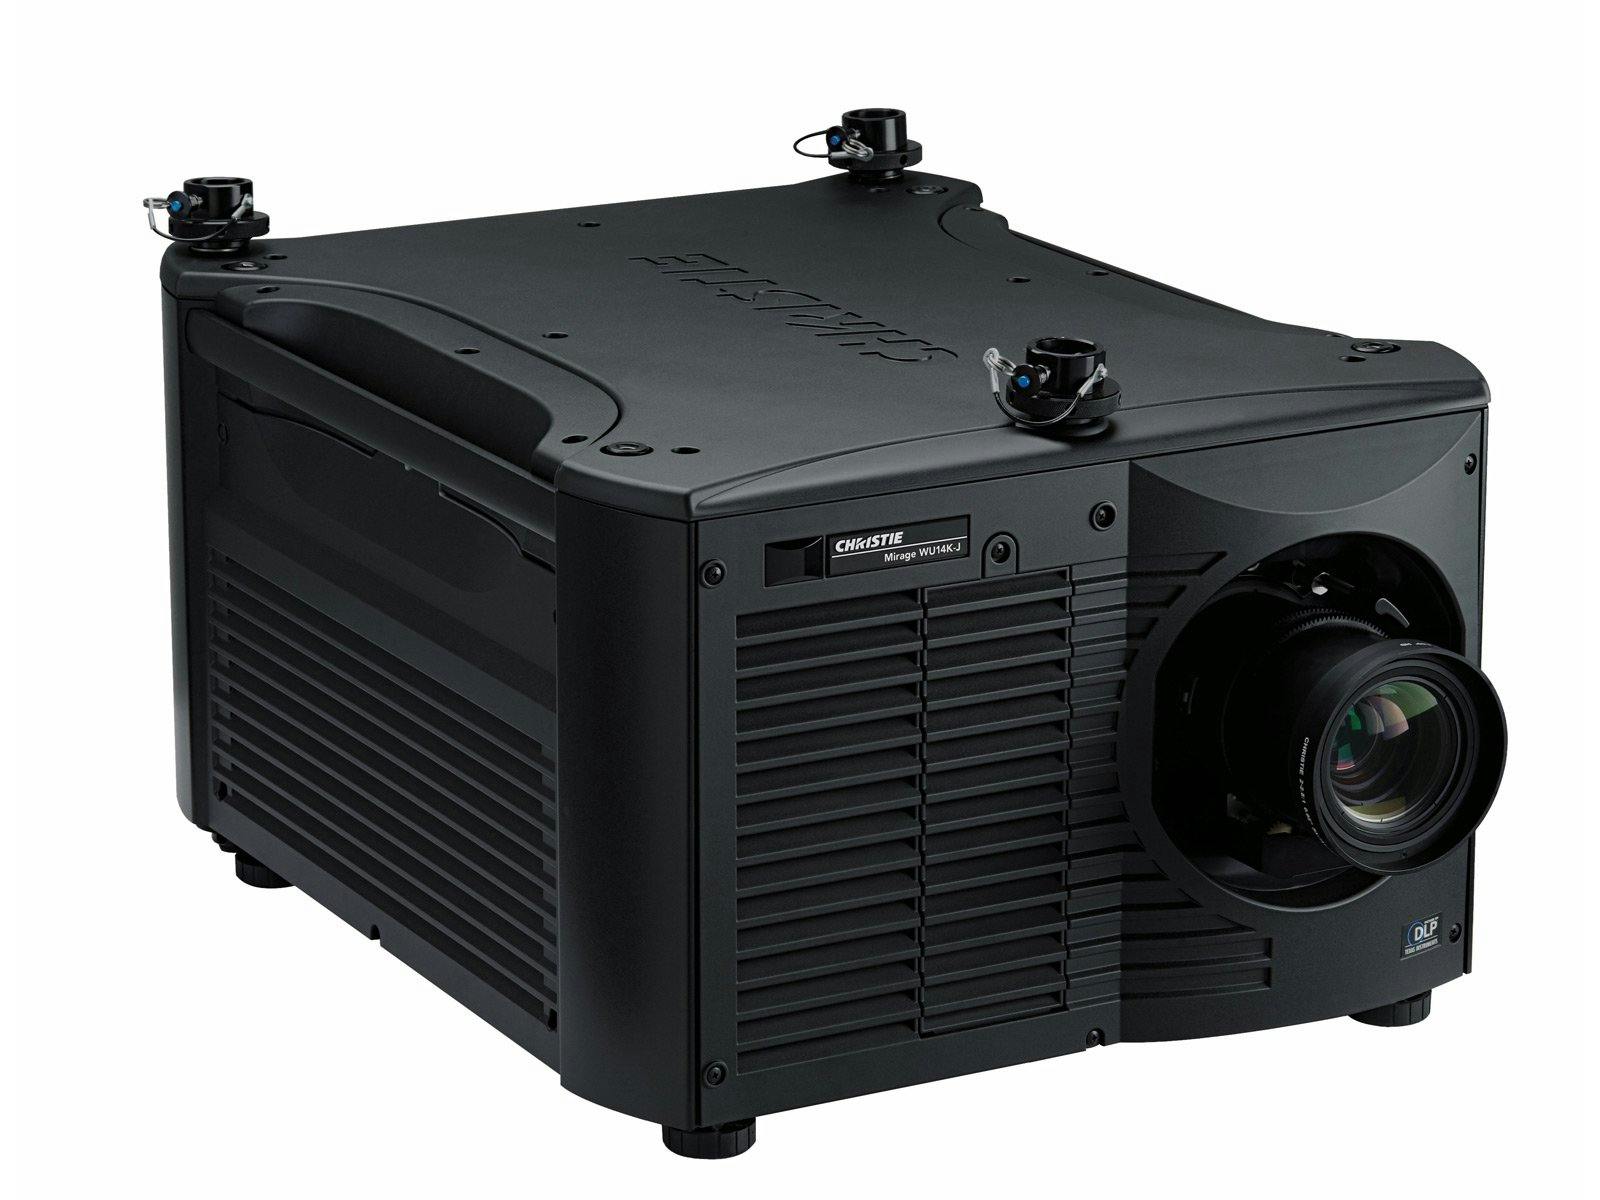 Christie Mirage WU14K-J 3D 3DLP projector | 132-012126-XX